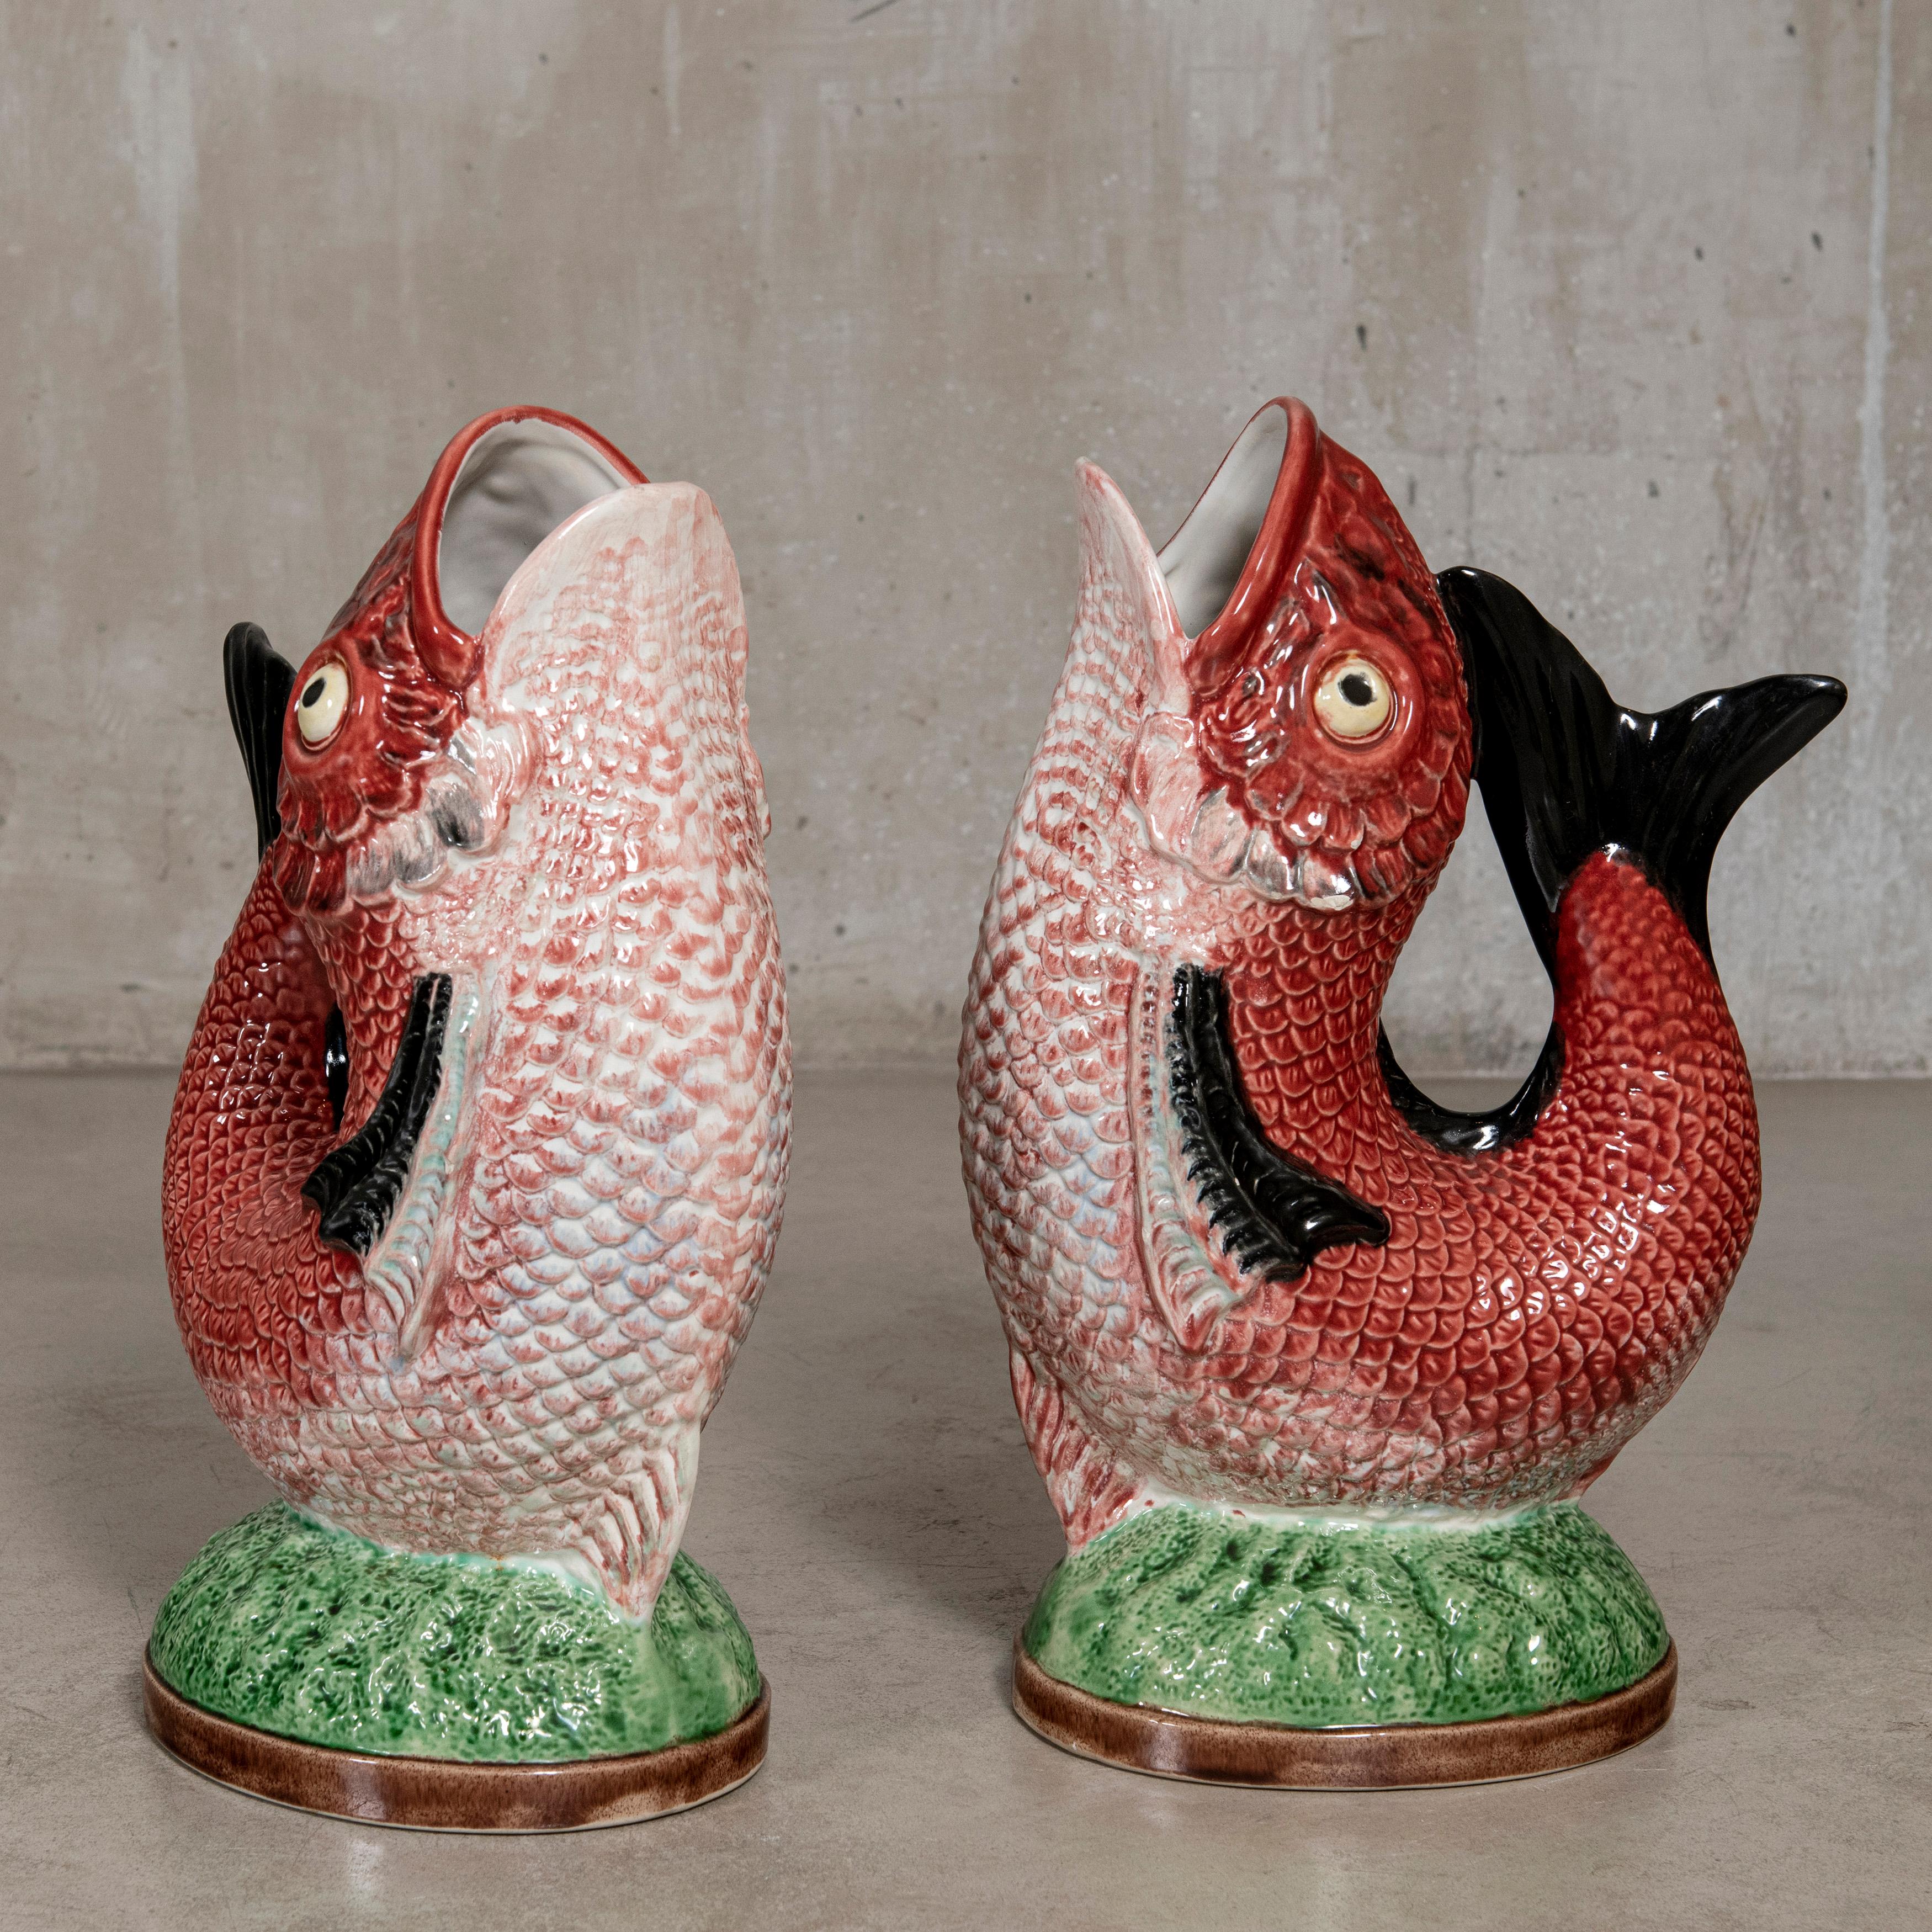 Pair of painted ceramic fish pitchers by Bordallo Pinheiro, Portugal, circa 1900.